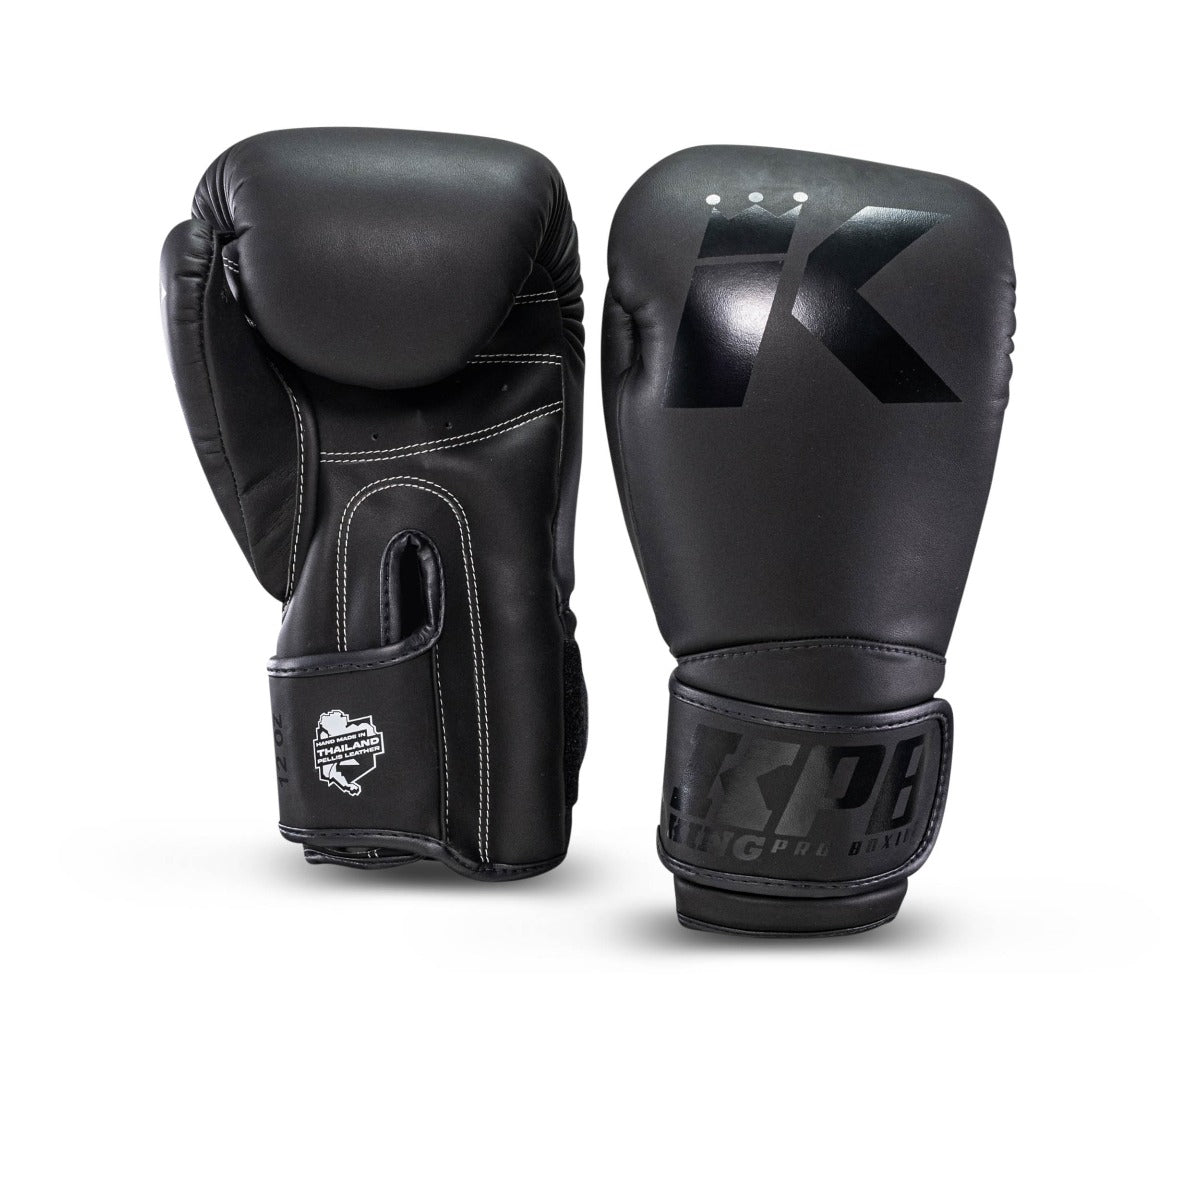 King PRO boxing boxing gloves - BGK 1